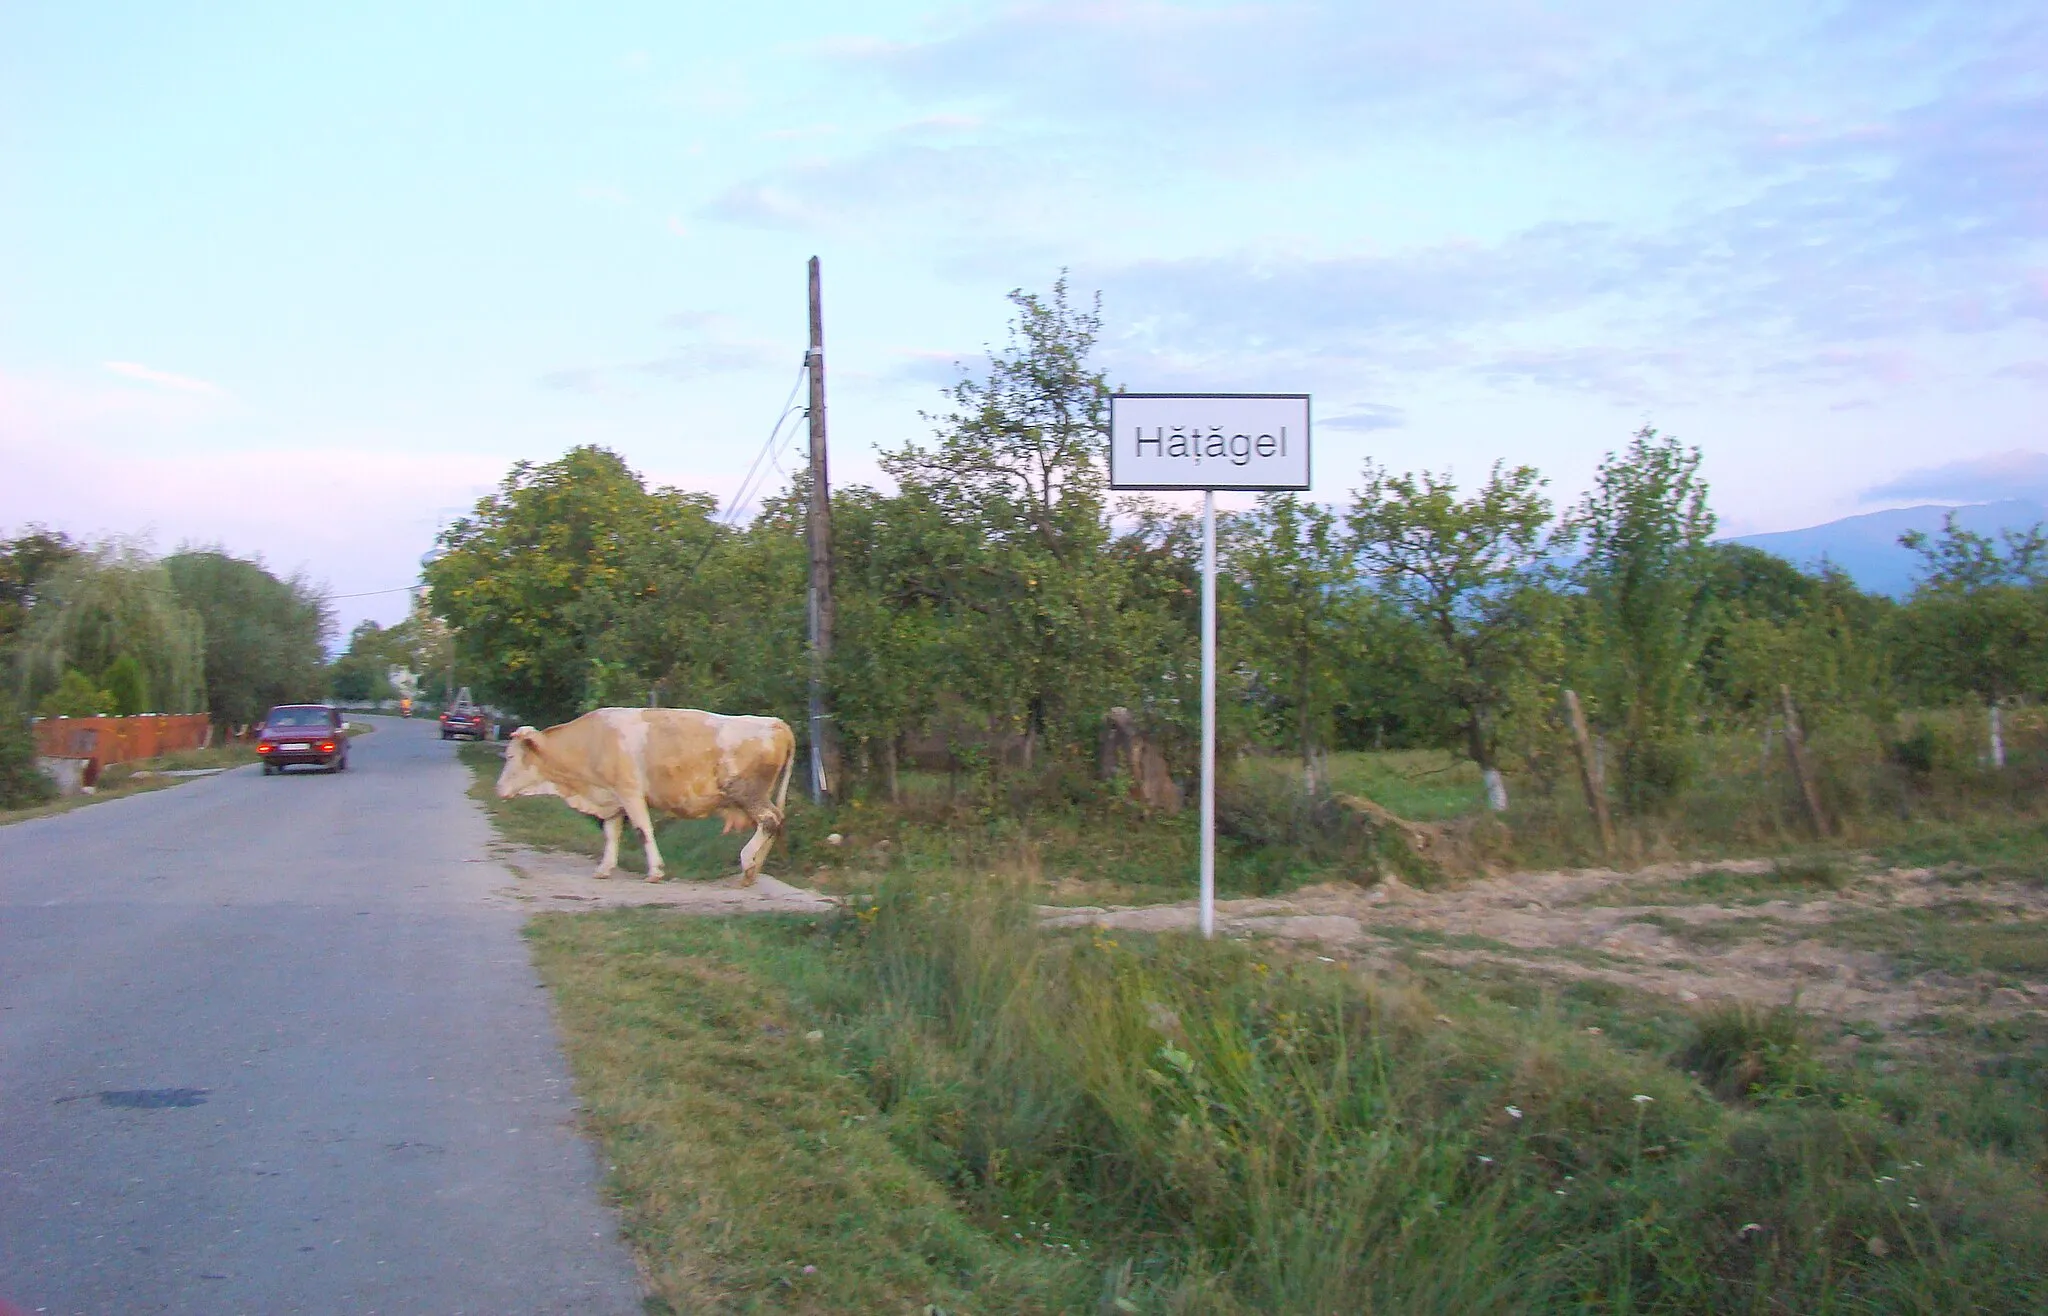 Photo showing: Hățăgel, Hunedoara